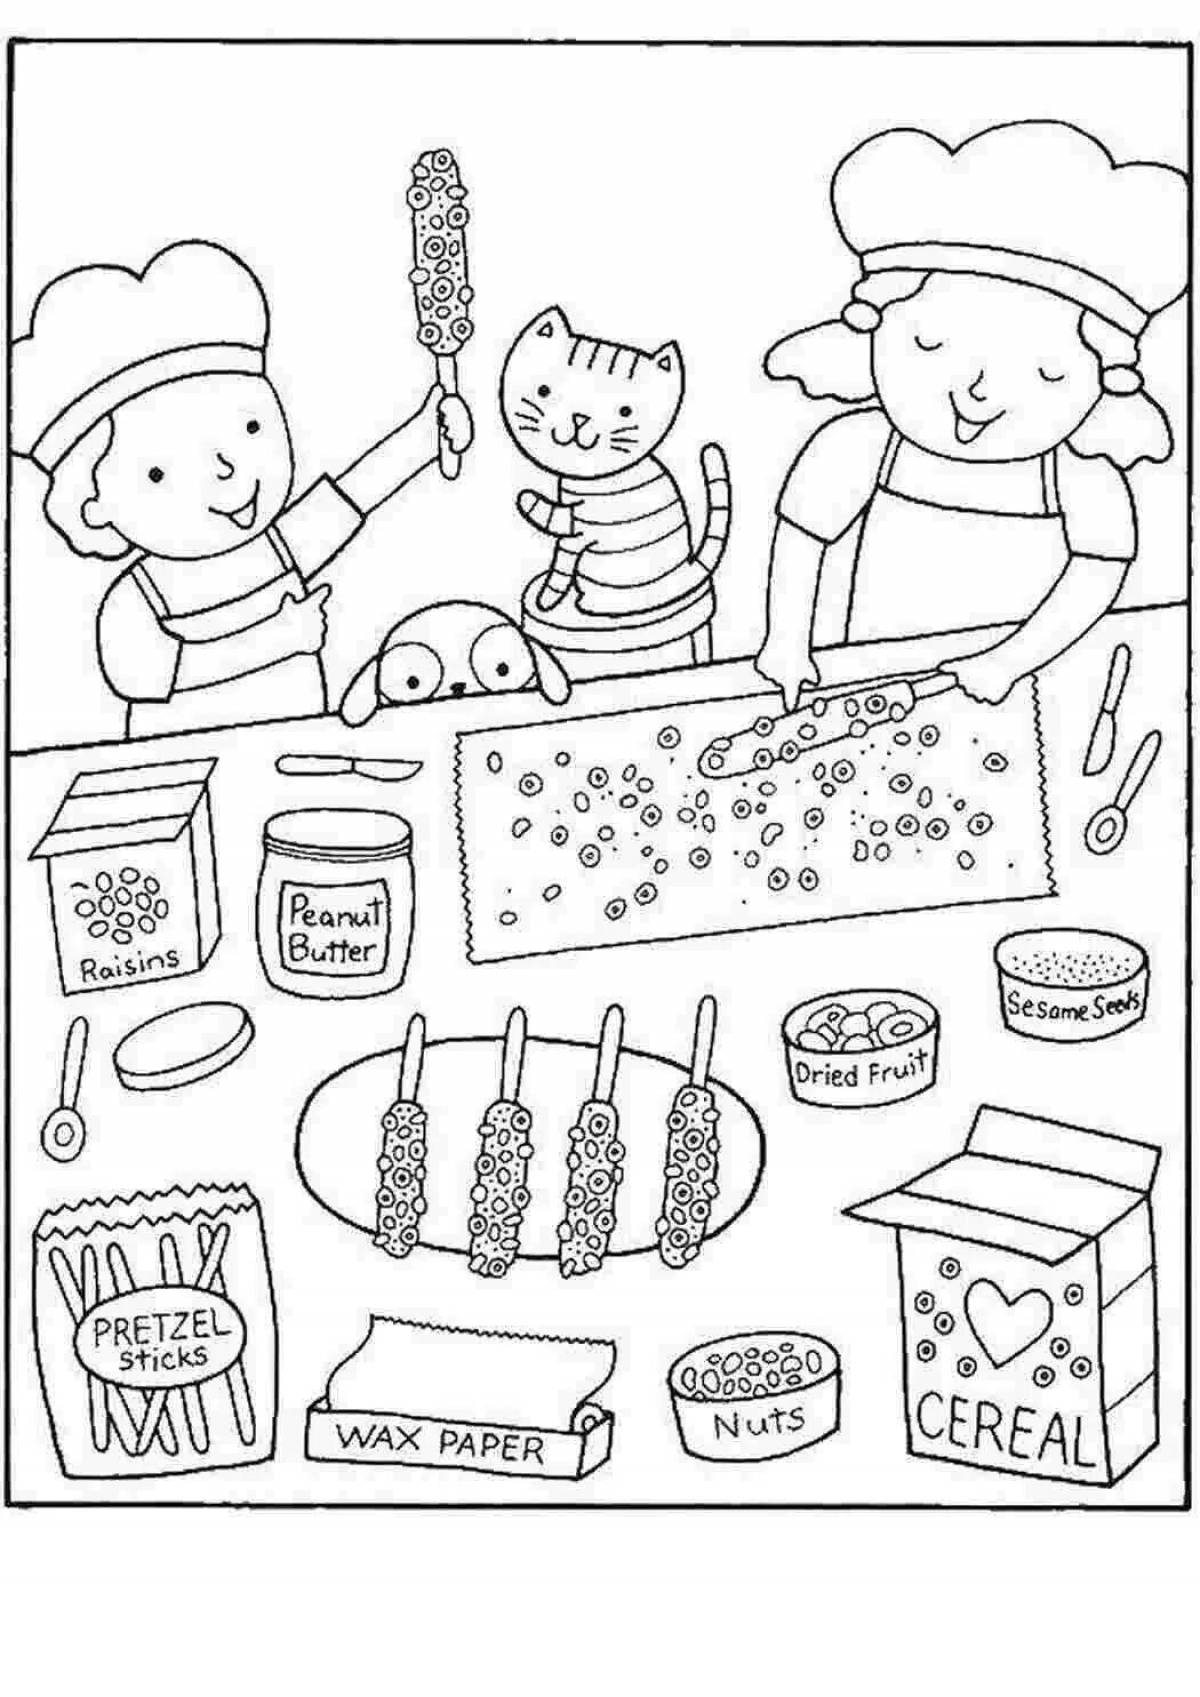 Fun food coloring book